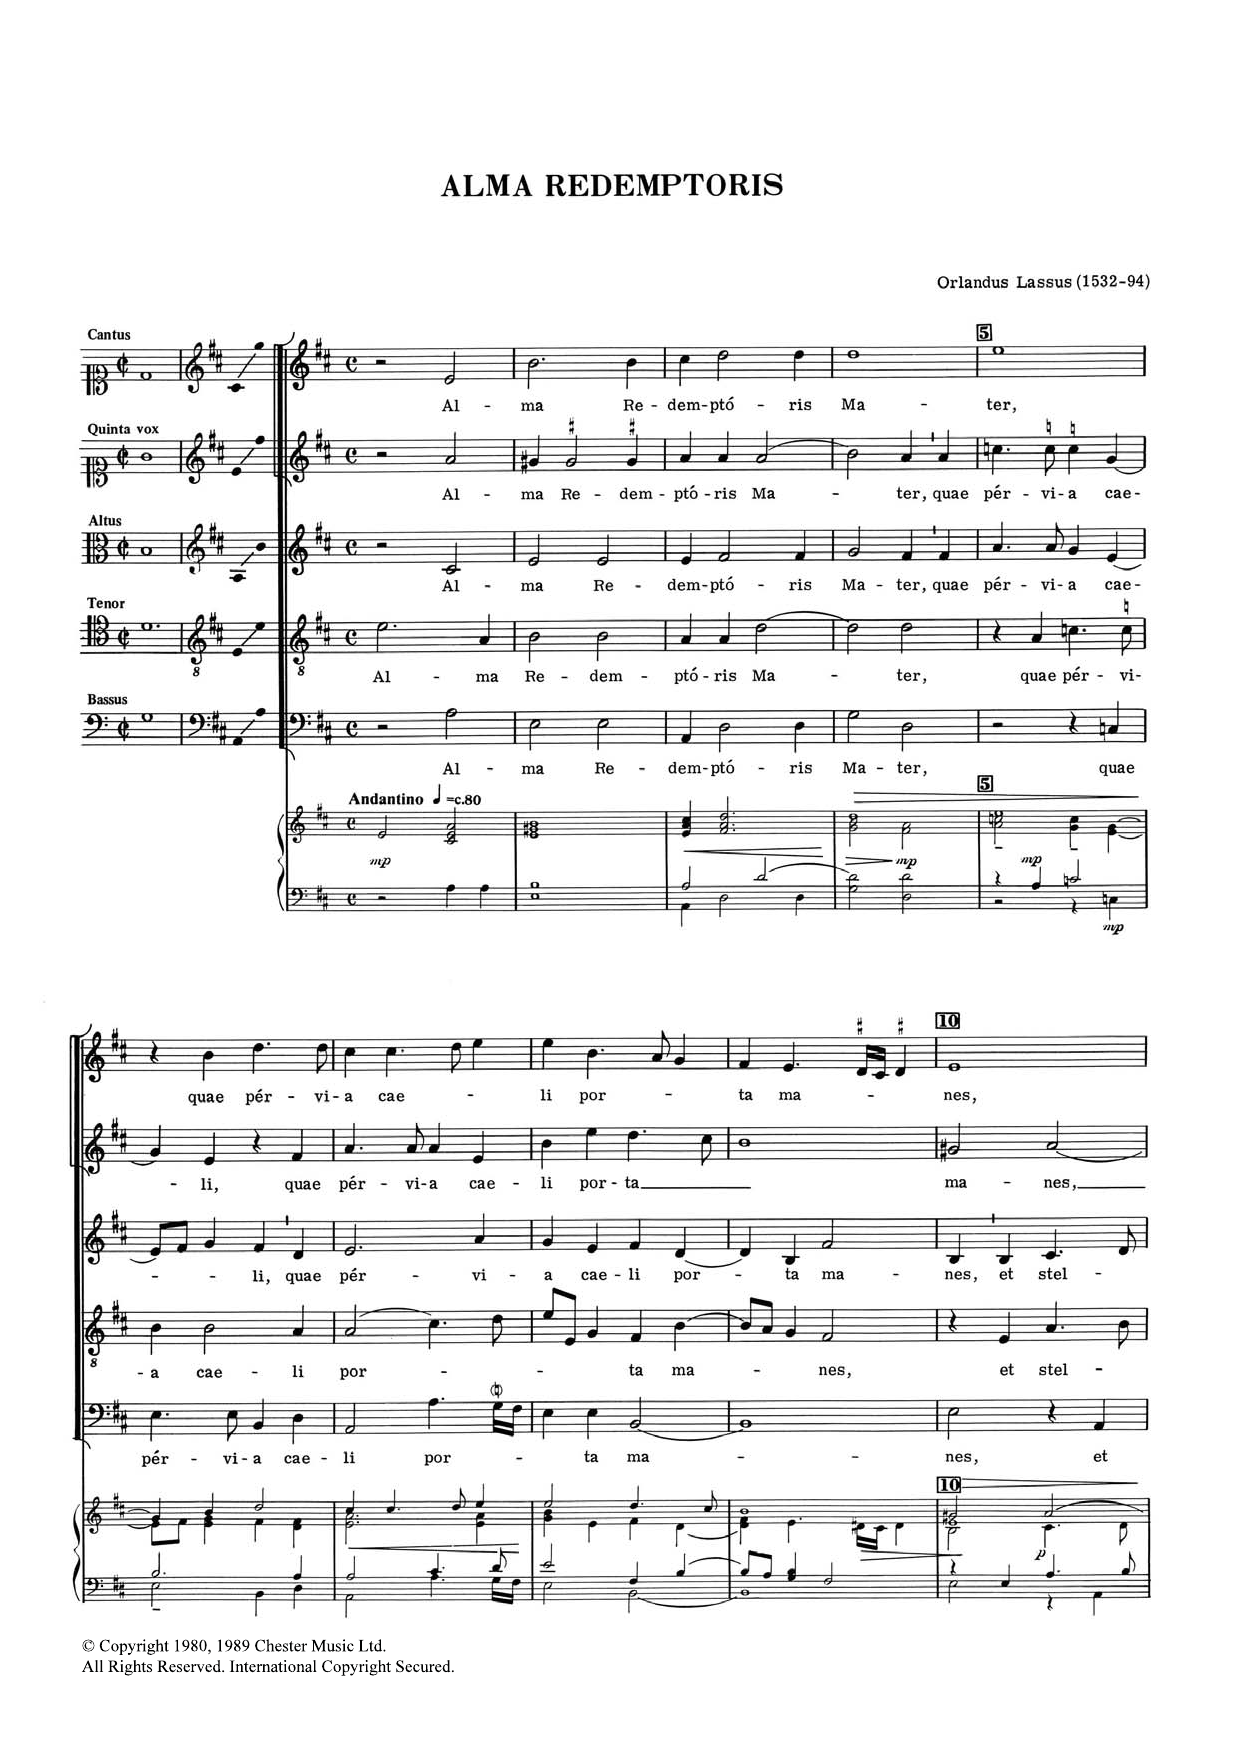 Orlandus Lassus Alma Redemptoris Sheet Music Notes & Chords for Choral SAATB - Download or Print PDF